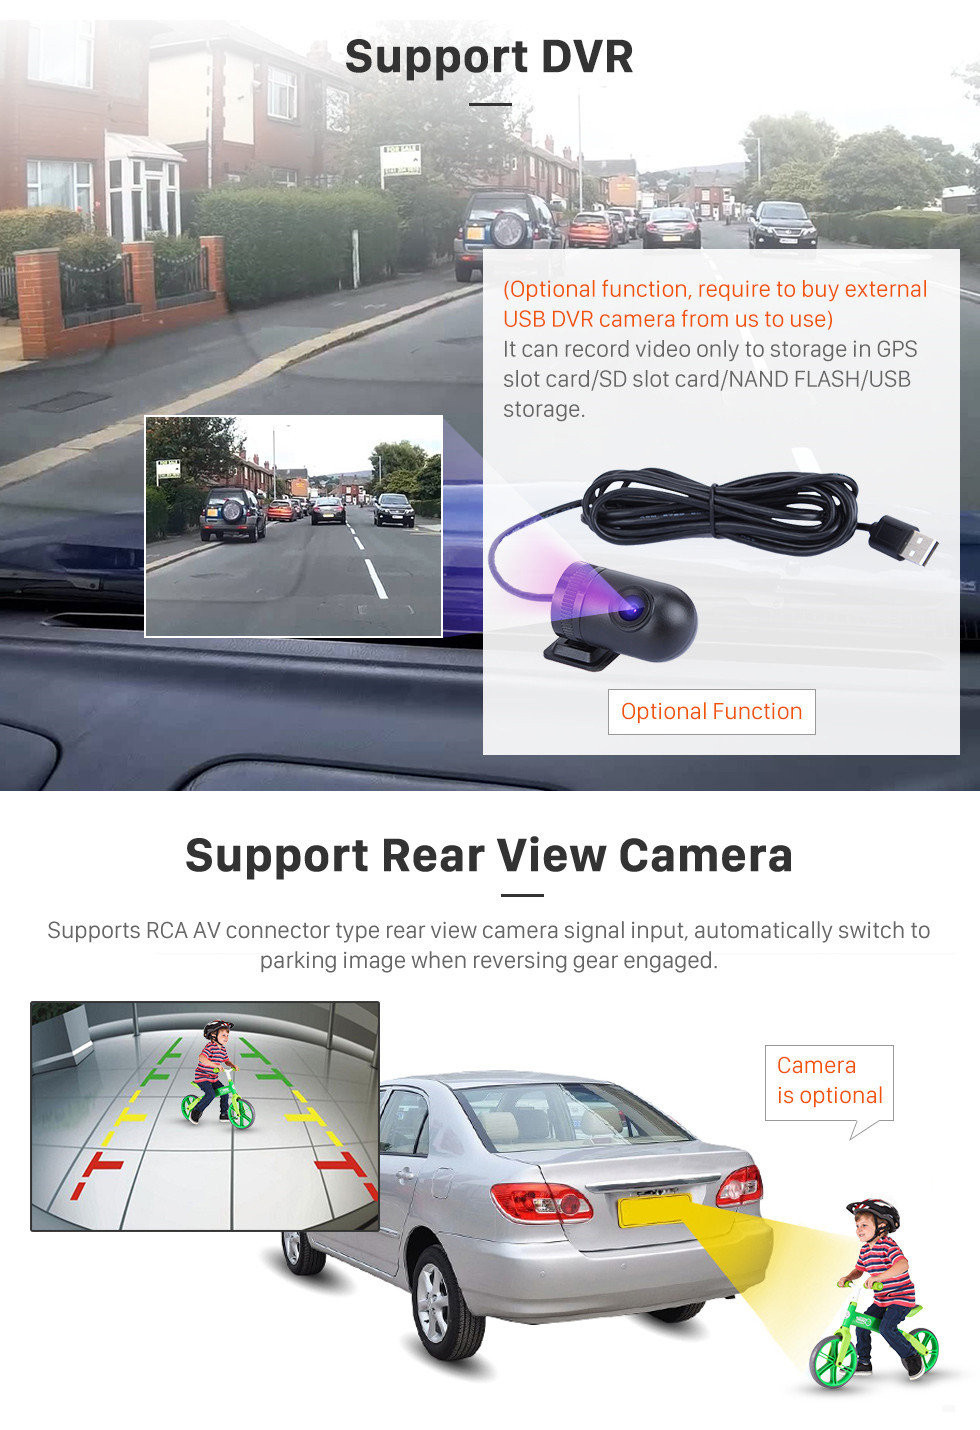 Seicane 2012 2013 2014 2015 2016 2017 Nissan X-TRAIL Qashqai A/V 9 inch HD touchscreen Radio GPS navigation Android 11.0 Audio System Bluetooth OBD2 Steering Wheel Control 